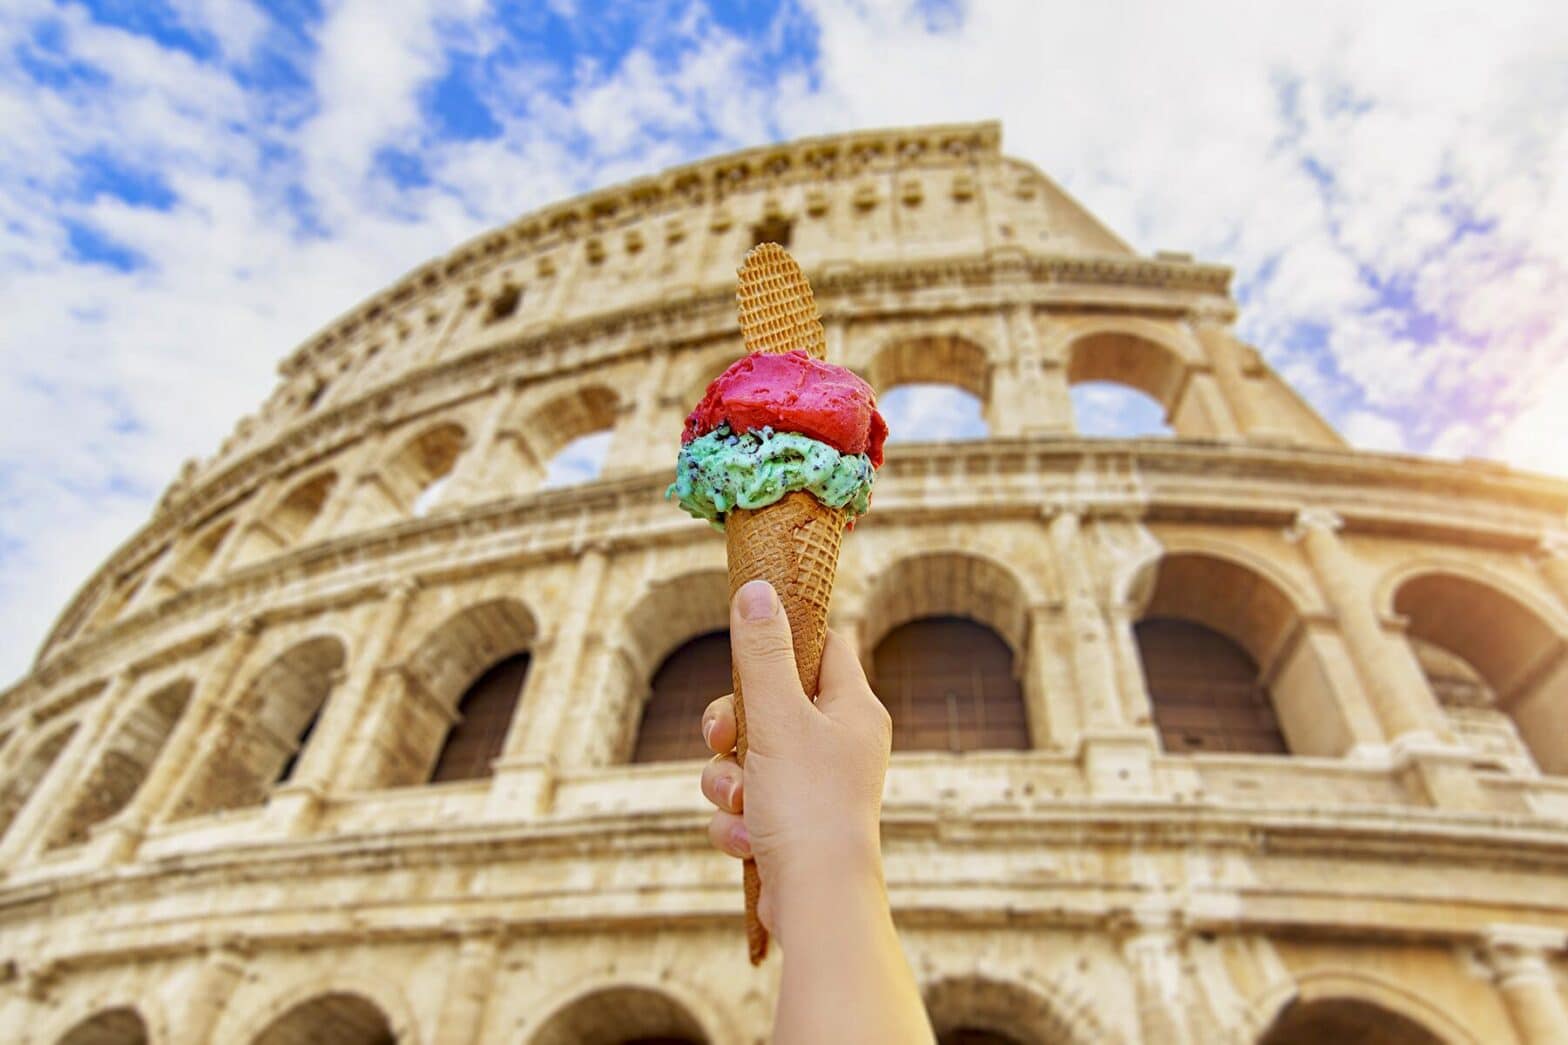 Migliori gelaterie artigianali a Roma